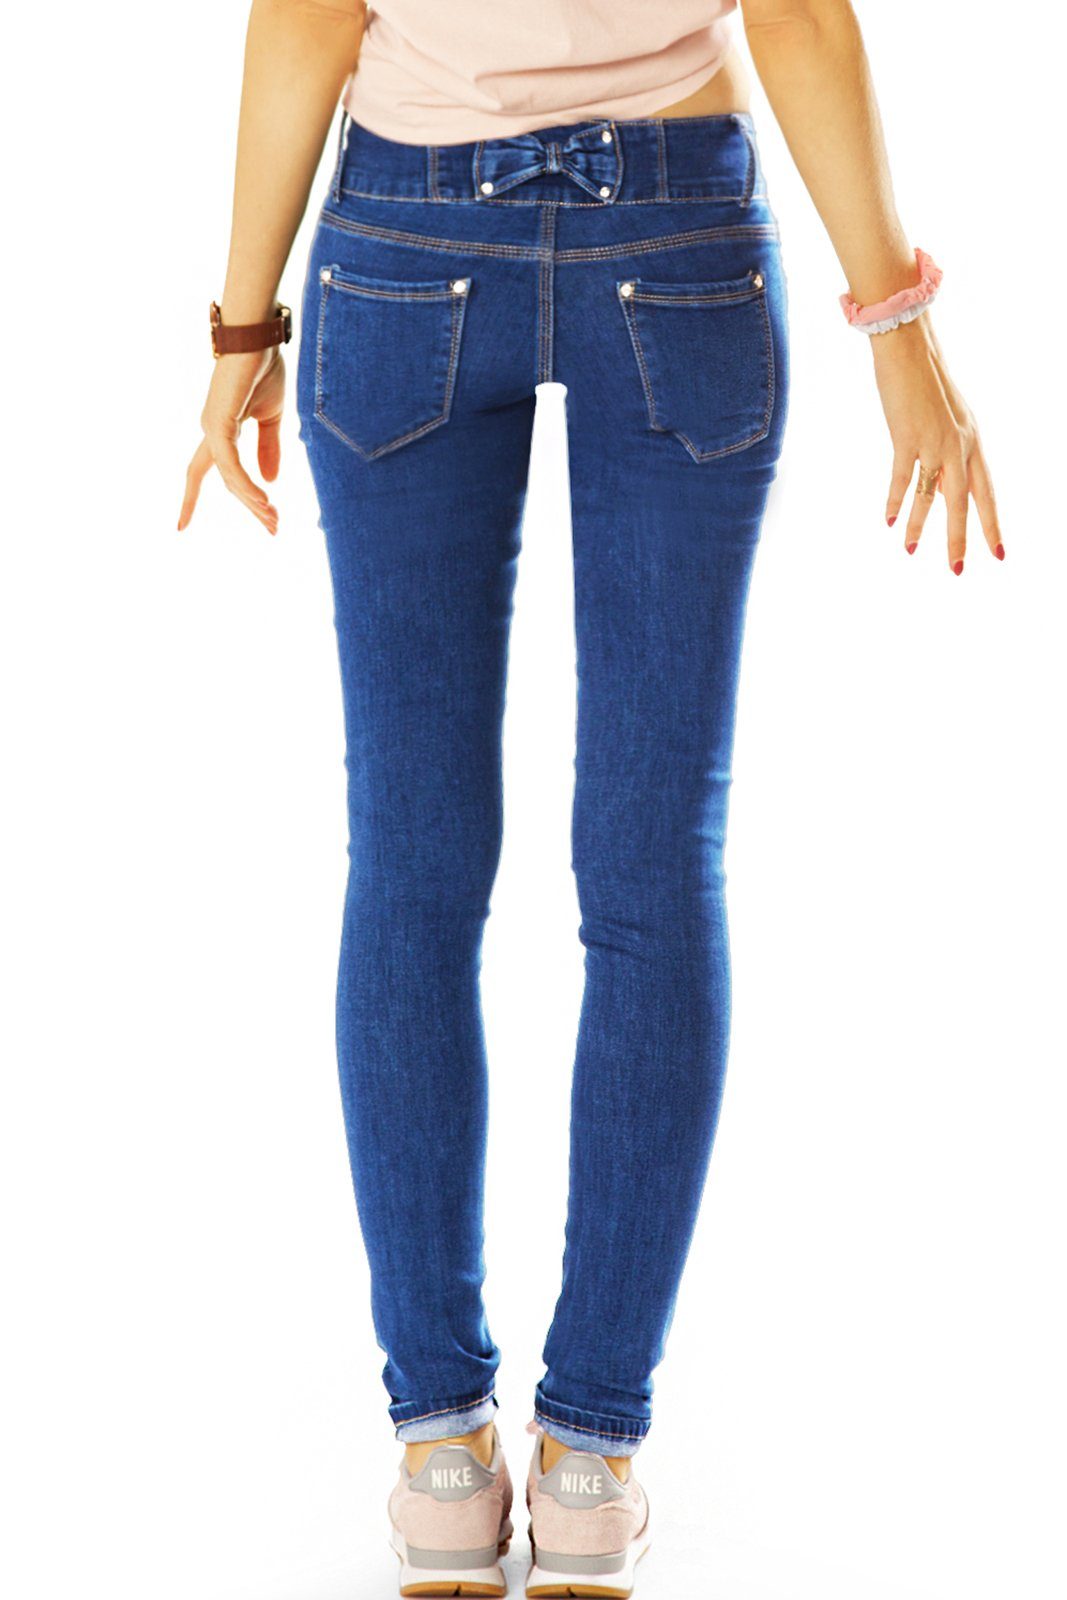 j3e-1 Röhrenjeans be Skinny Low-rise-Jeans styled - Waist 5-Pocket-Style Hüftjeans Damen Low - Hose